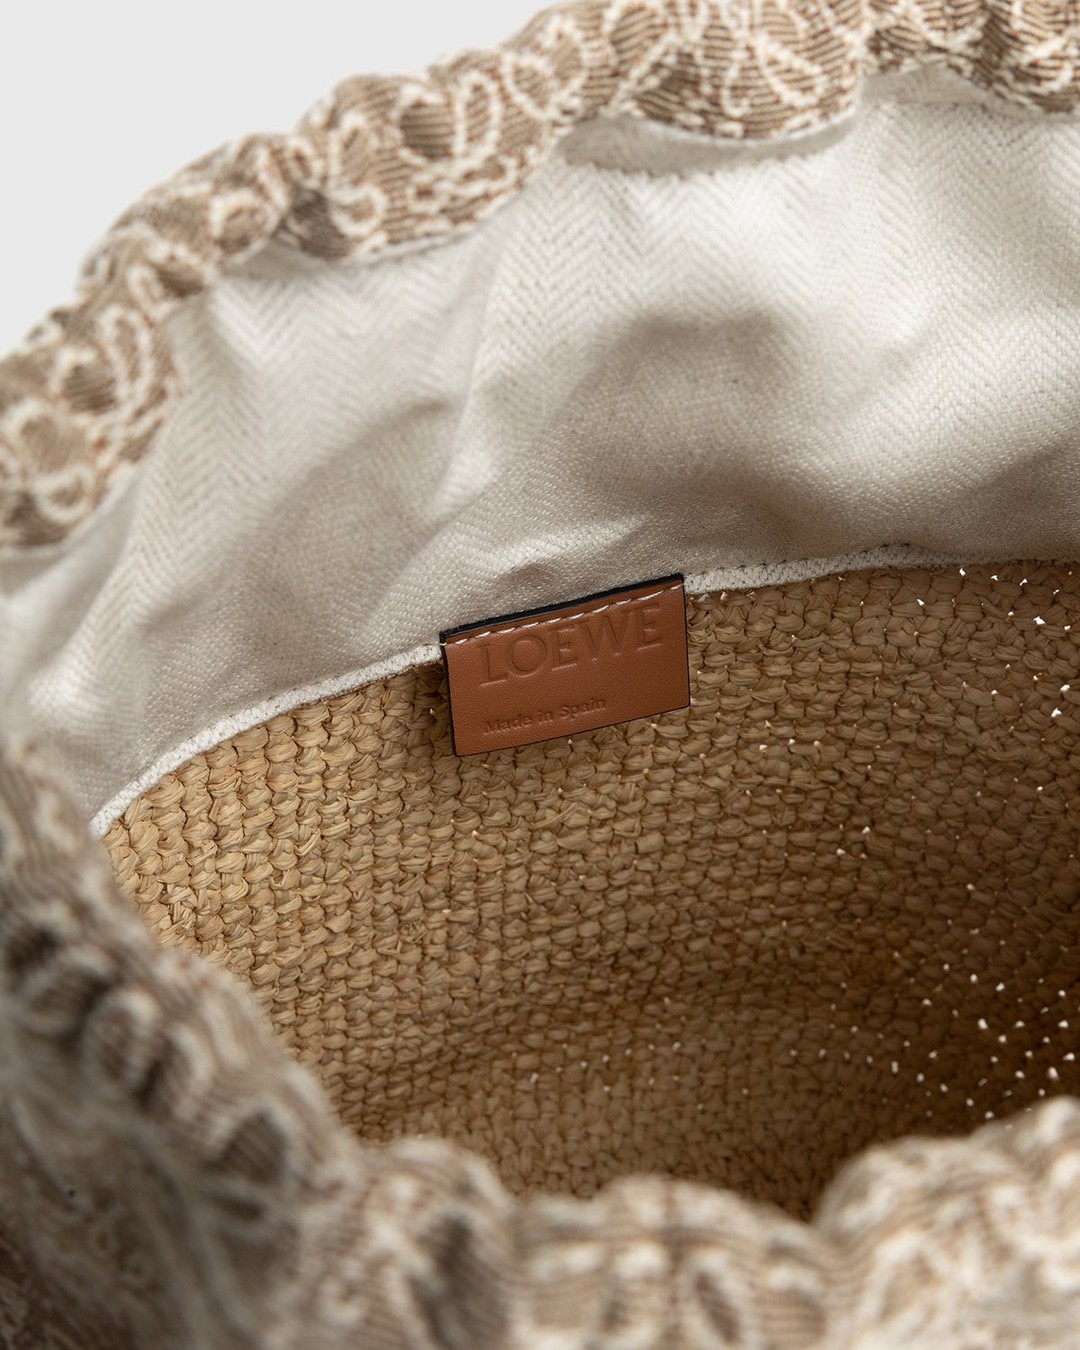 Loewe – Paula's Ibiza Pochette Anagram Basket Bag Natural/Tan - Bags - Beige - Image 4